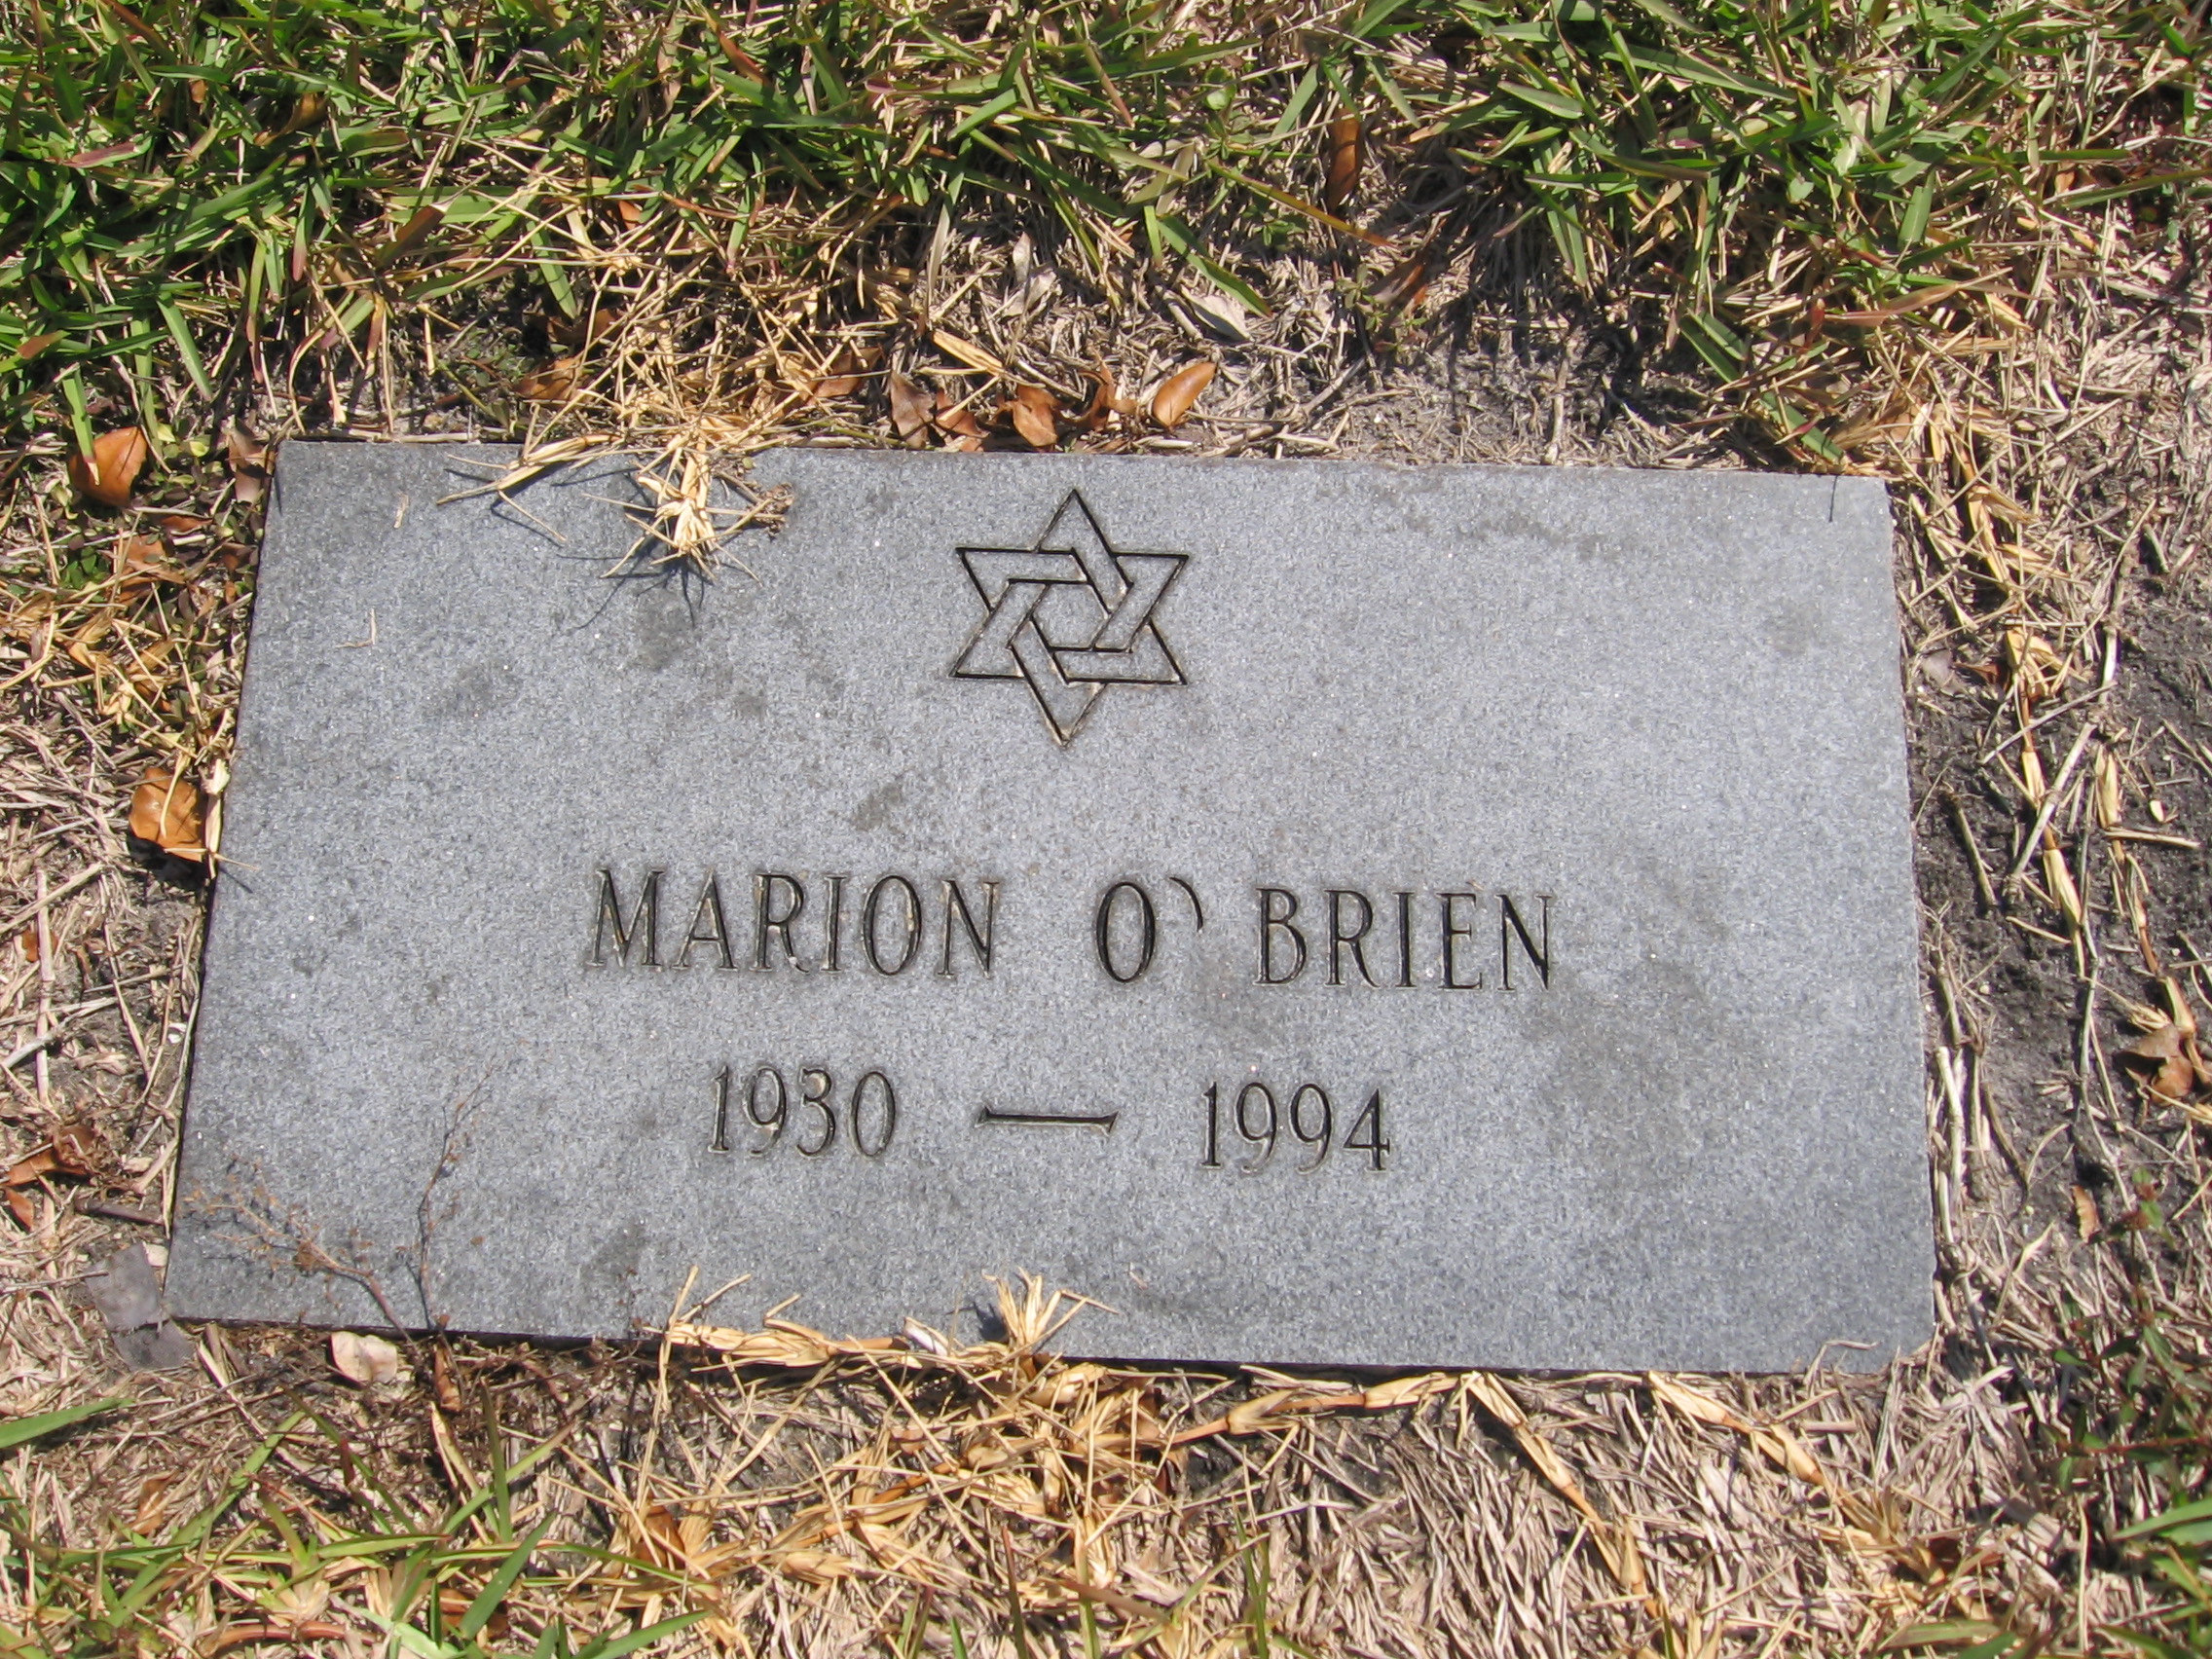 Marion O Brien